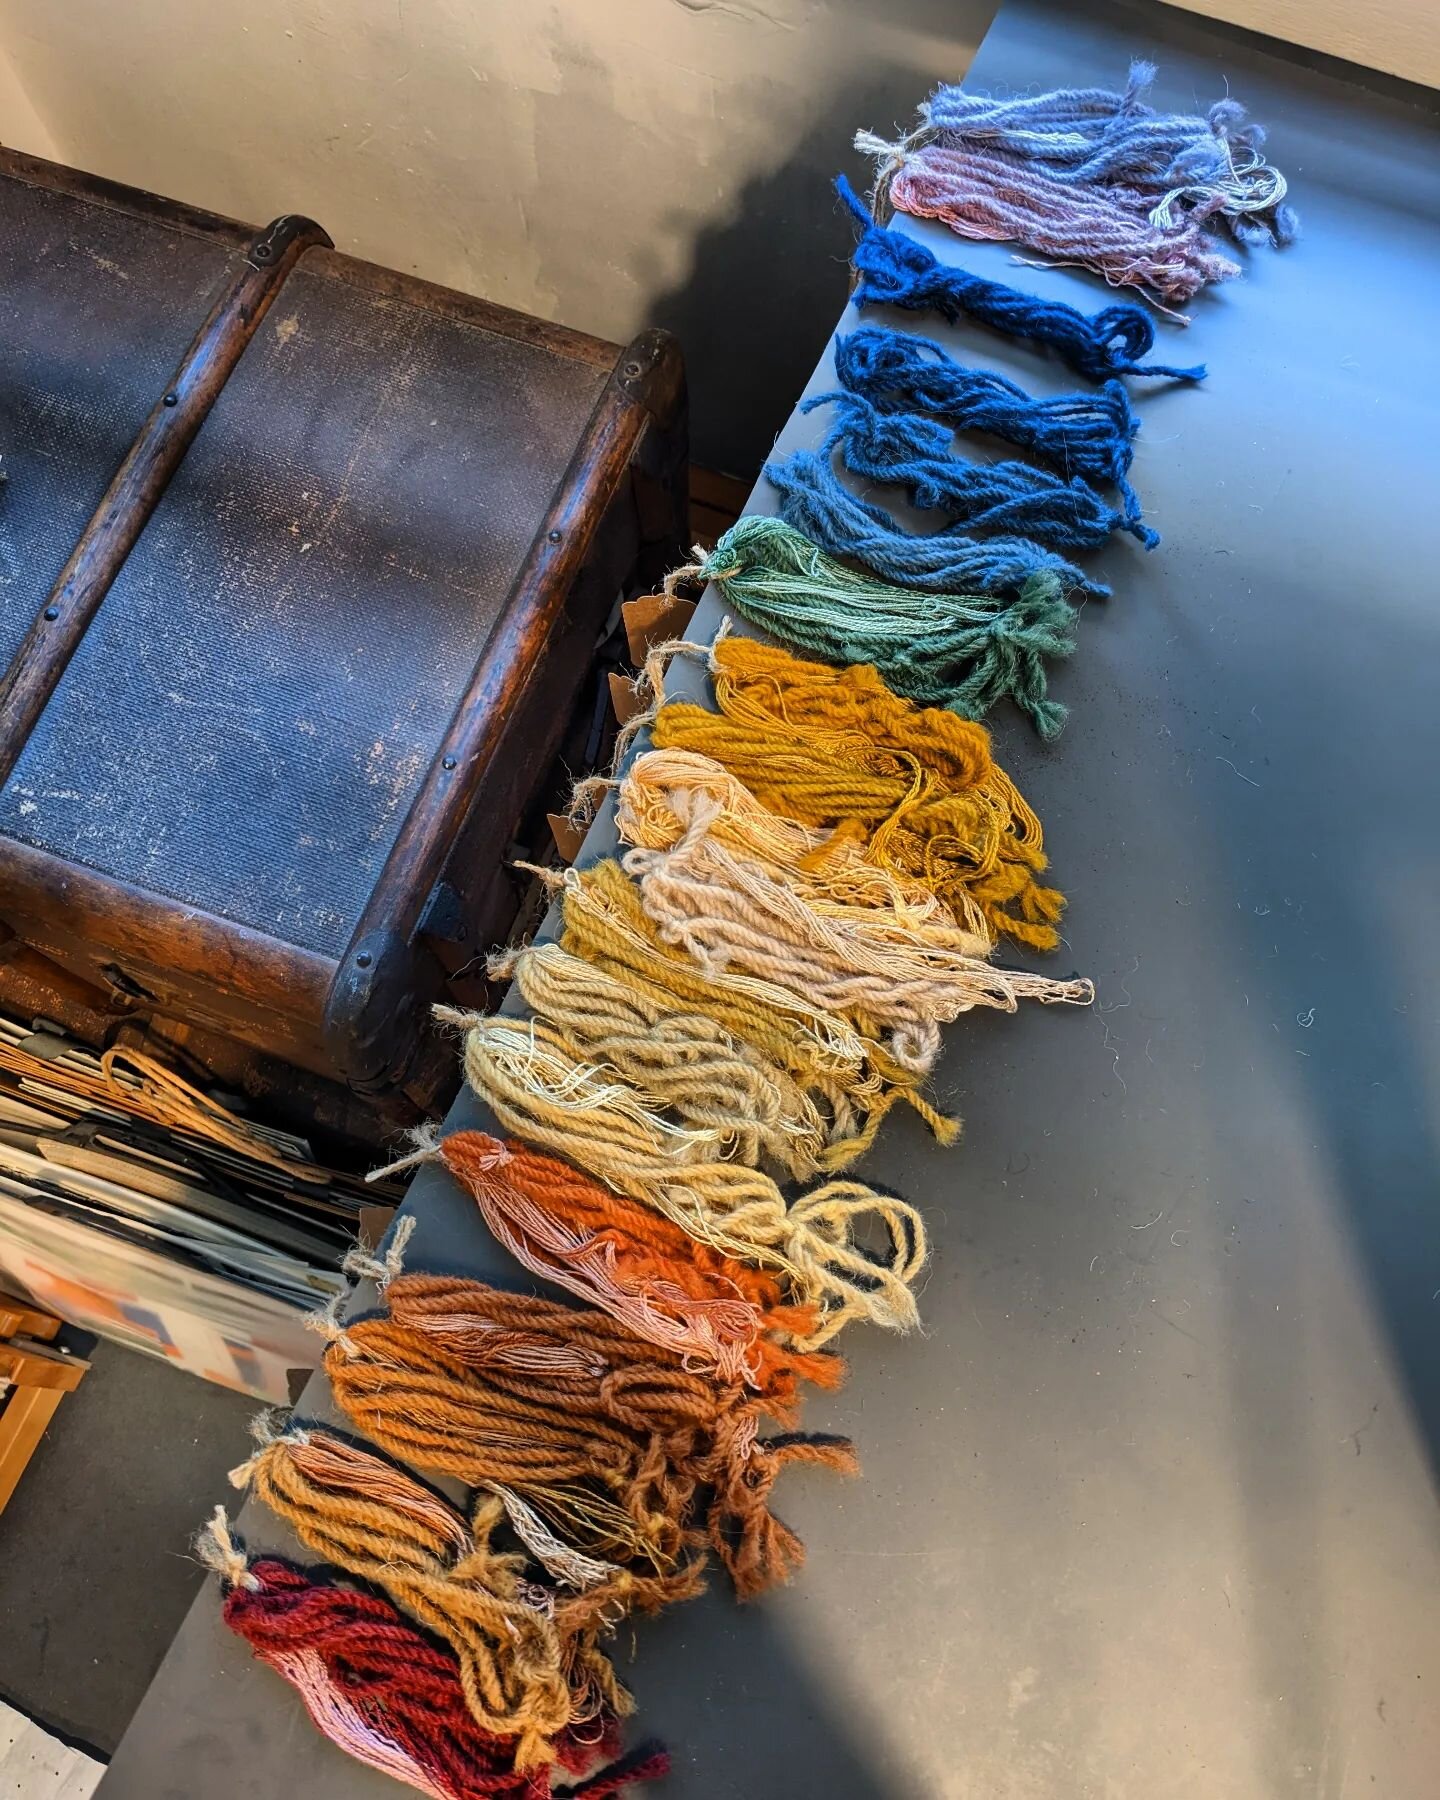 Naturally dyed yarn samples (wool, silk, SeaCell + bamboo)...
.
.
.
.
.
#naturaldyes #sustainable #textiles #weaver #yarn #design #craft #weaving #artisan #contemporarycraft #designideas #ideas #modernart #art #designermaker #artist #colour #line #si